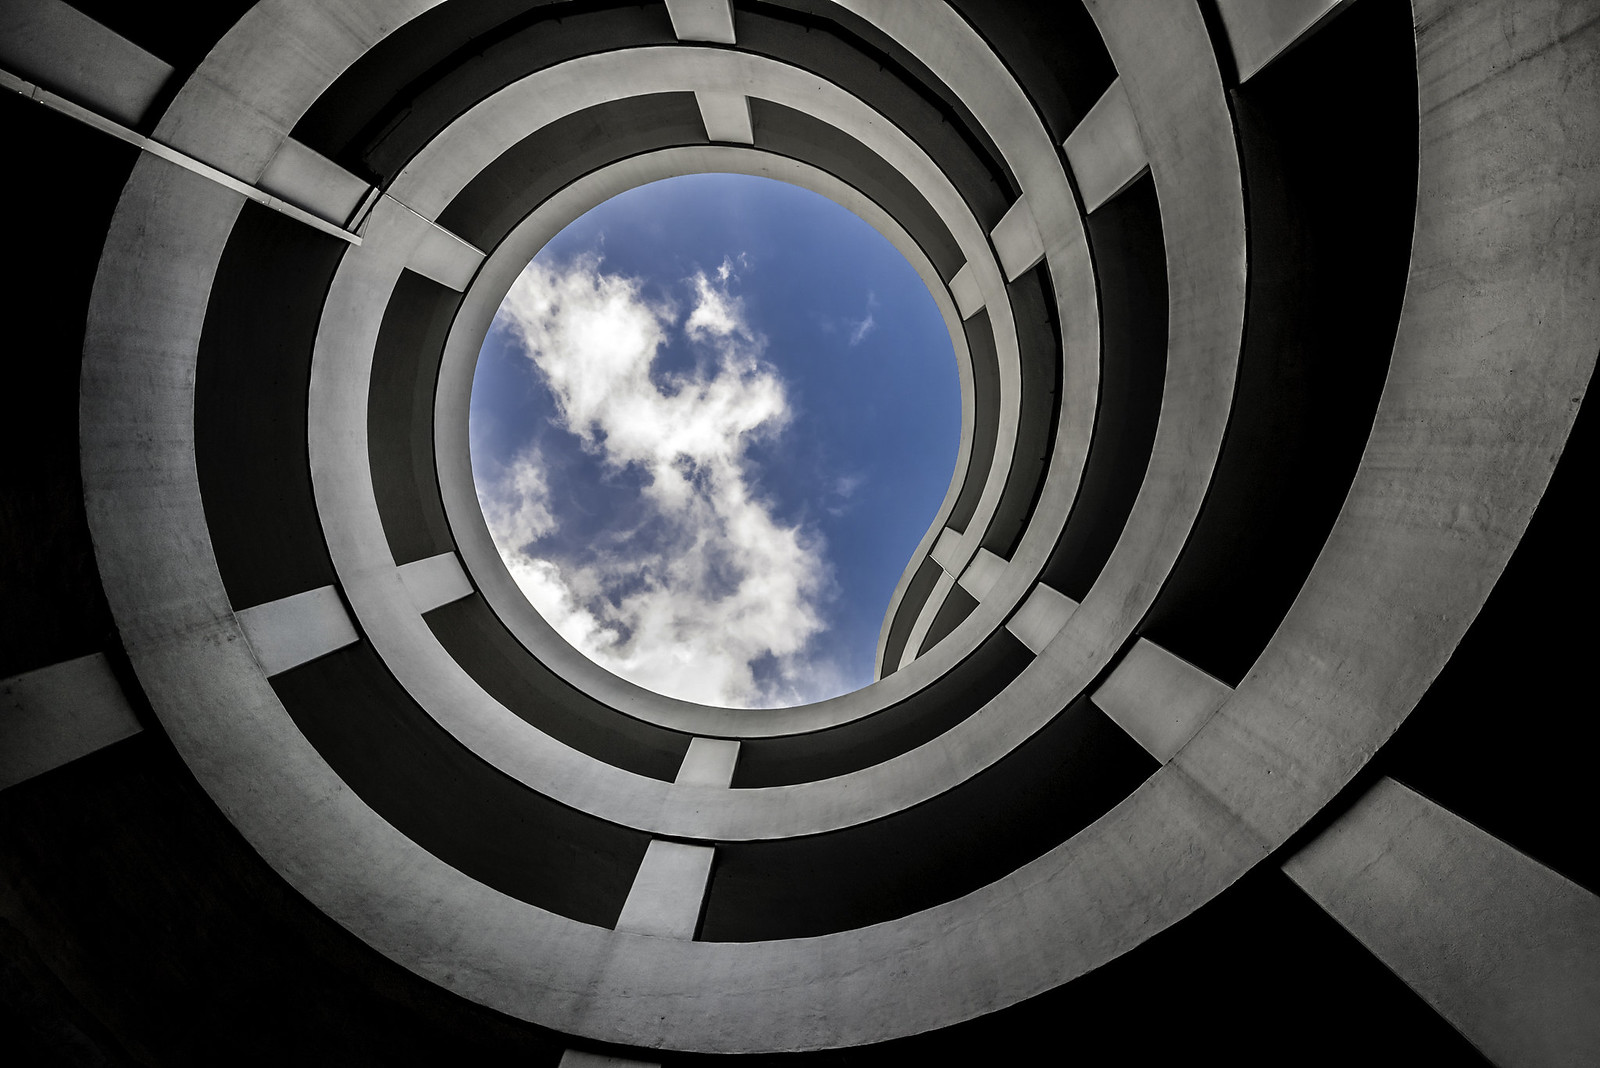 Spiral to the sky by Carsten Heyer